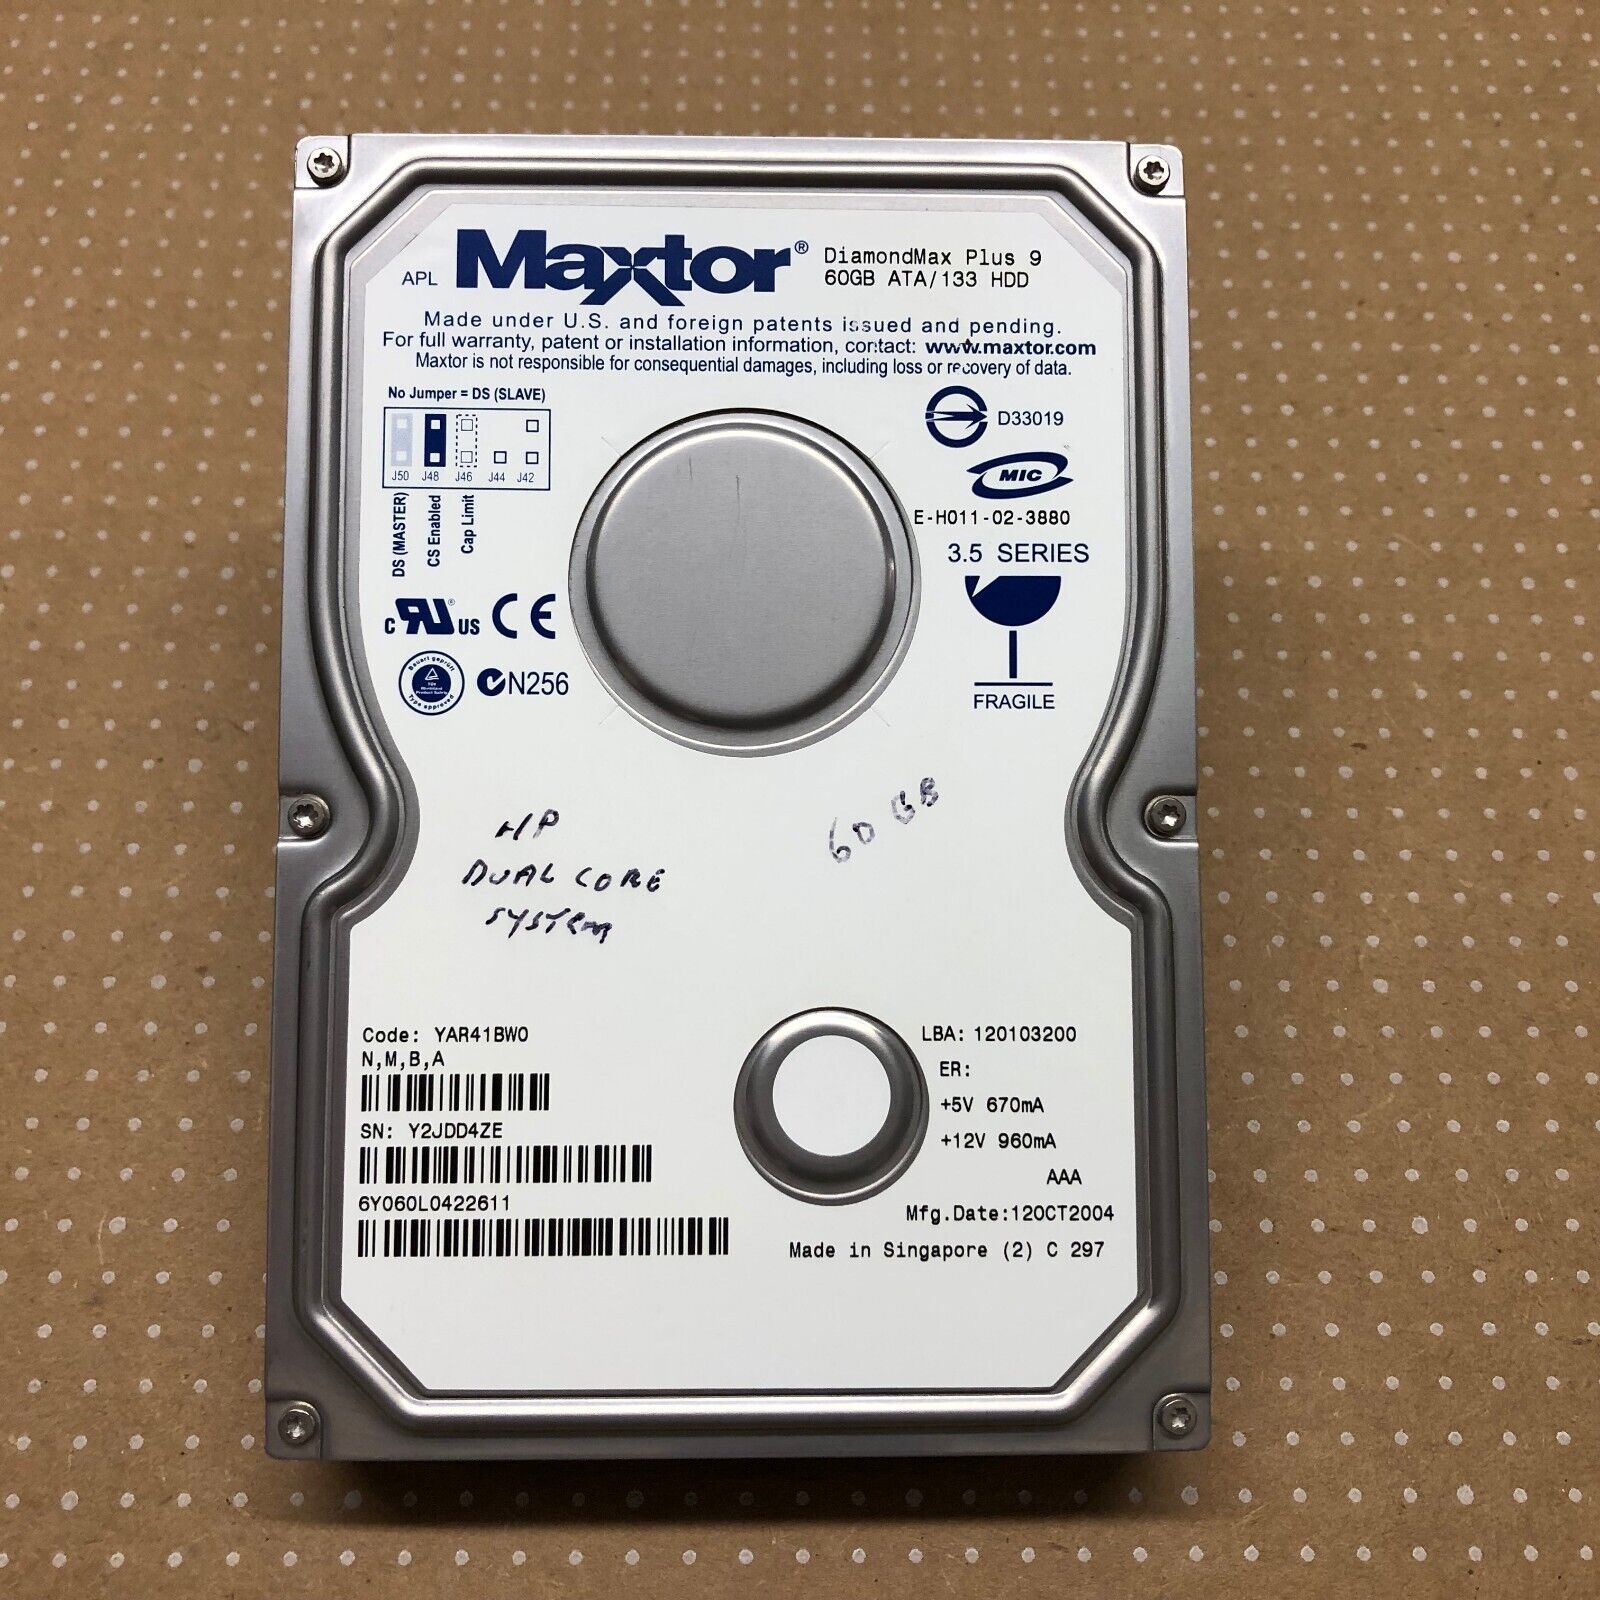 Maxtor DiamondMax Plus 9 6Y060L0 (YAR41BW0) 60GB IDE Hard Drive - TESTED & WIPED